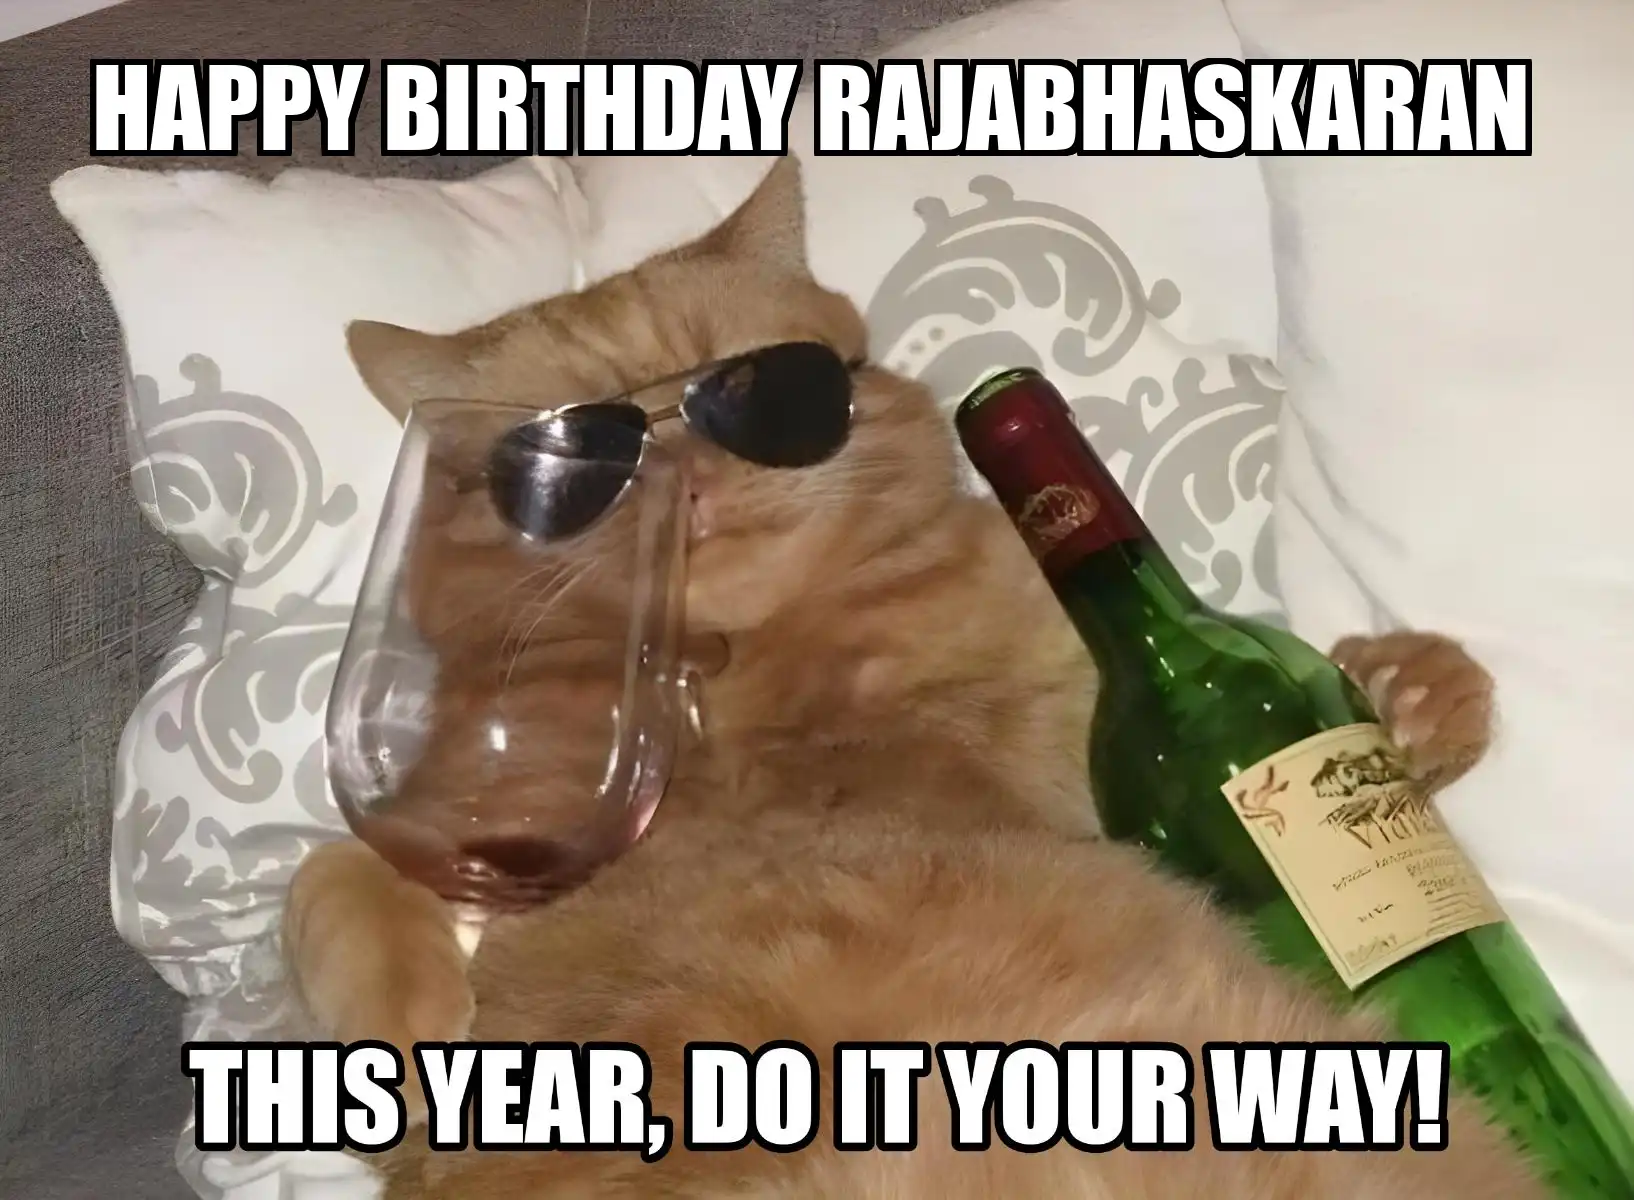 Happy Birthday Rajabhaskaran This Year Do It Your Way Meme